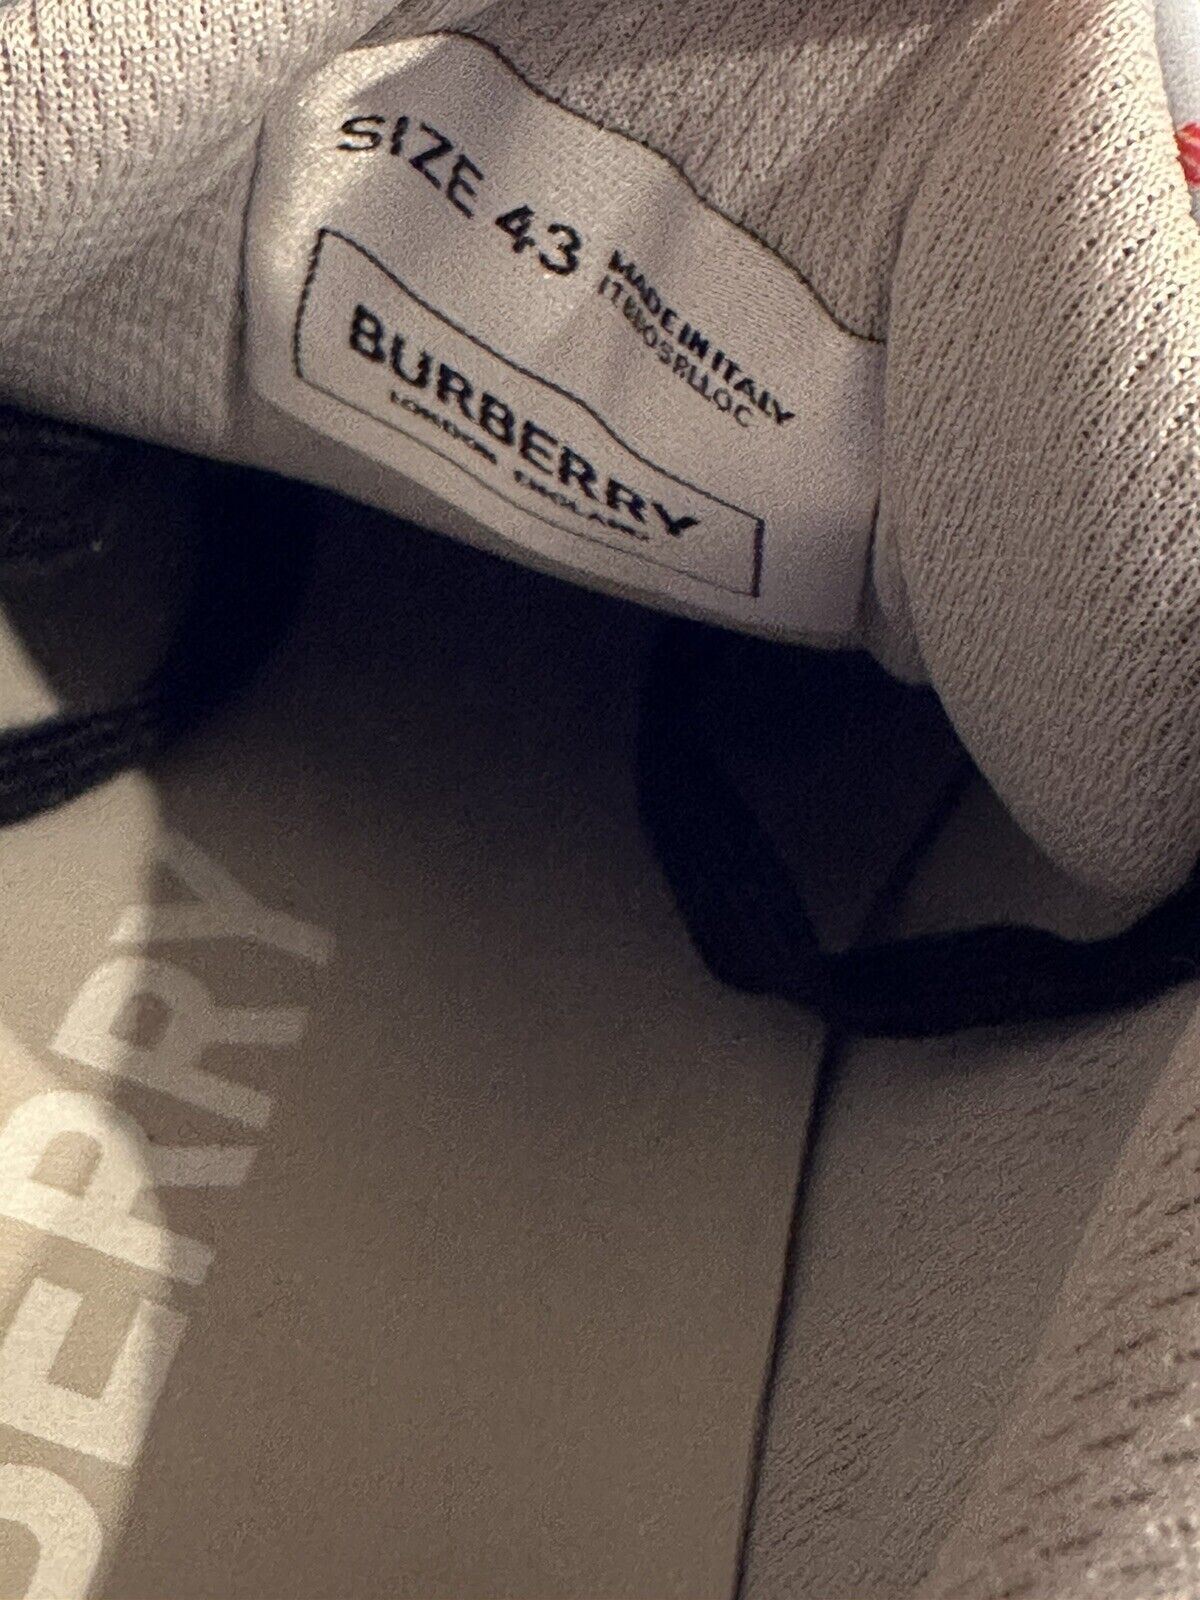 NIB $790 Burberry Men's Ramsey Pale Blue Sneakers 10 US (43 Euro) 8051415 IT